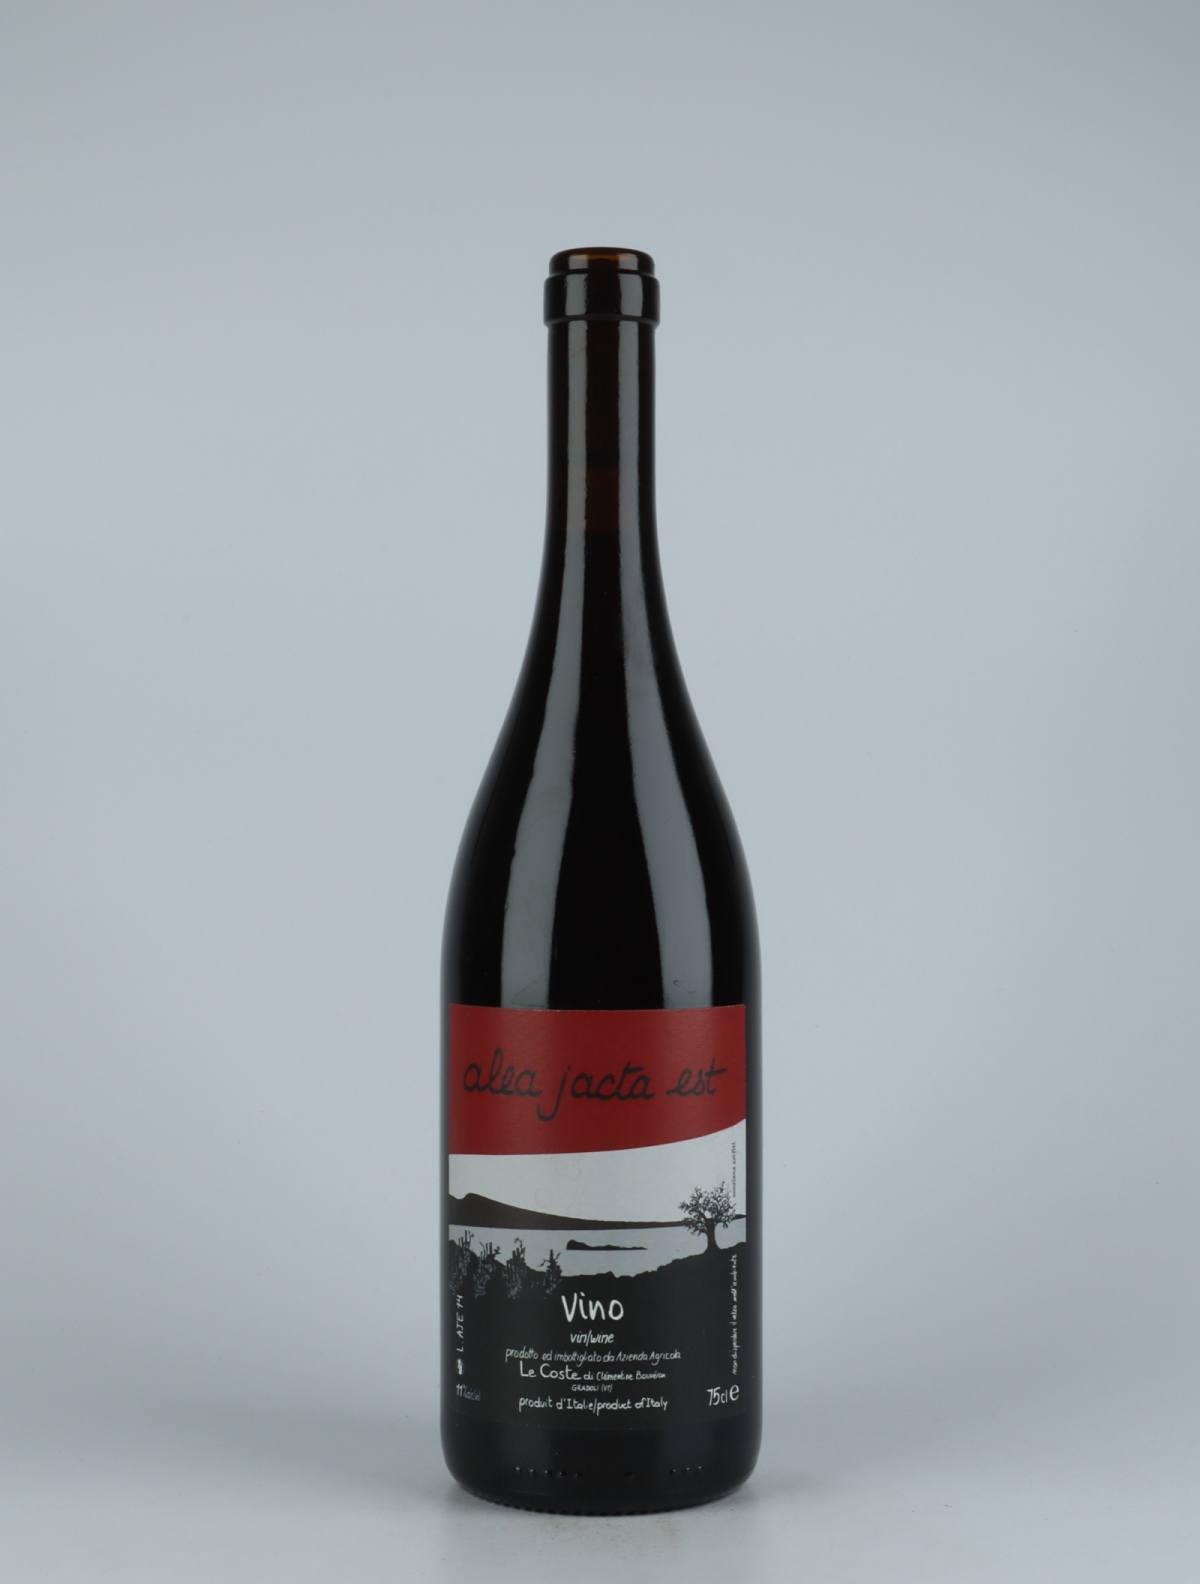 A bottle 2014 Alea Jacta Est Red wine from , Lazio in Italy